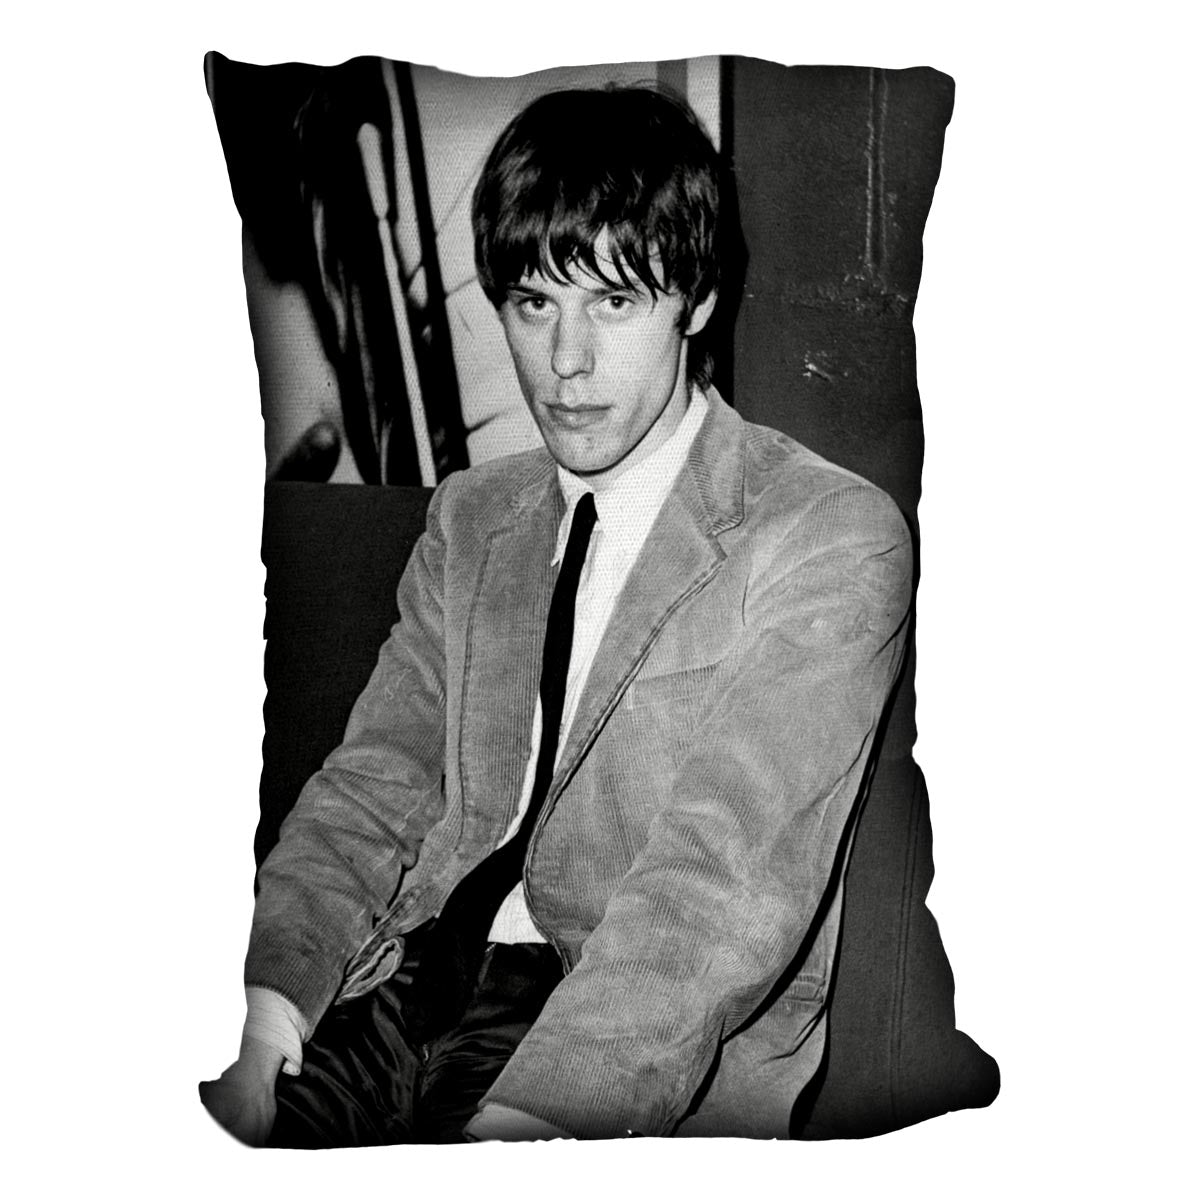 Jeff Beck of The Yardbirds Cushion